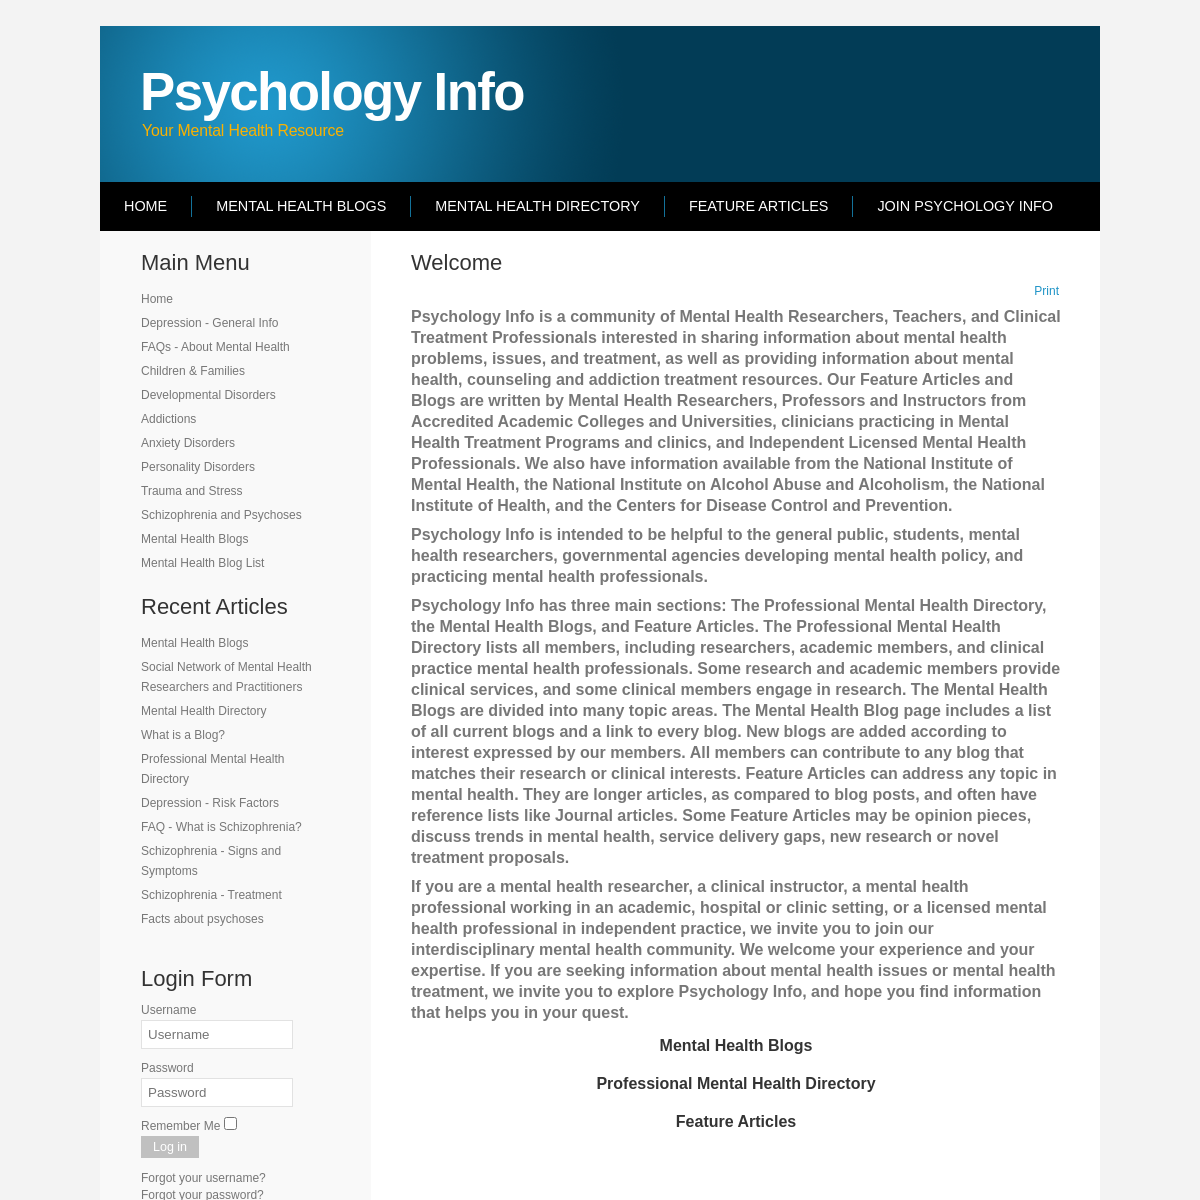 A complete backup of psychologyinfo.com